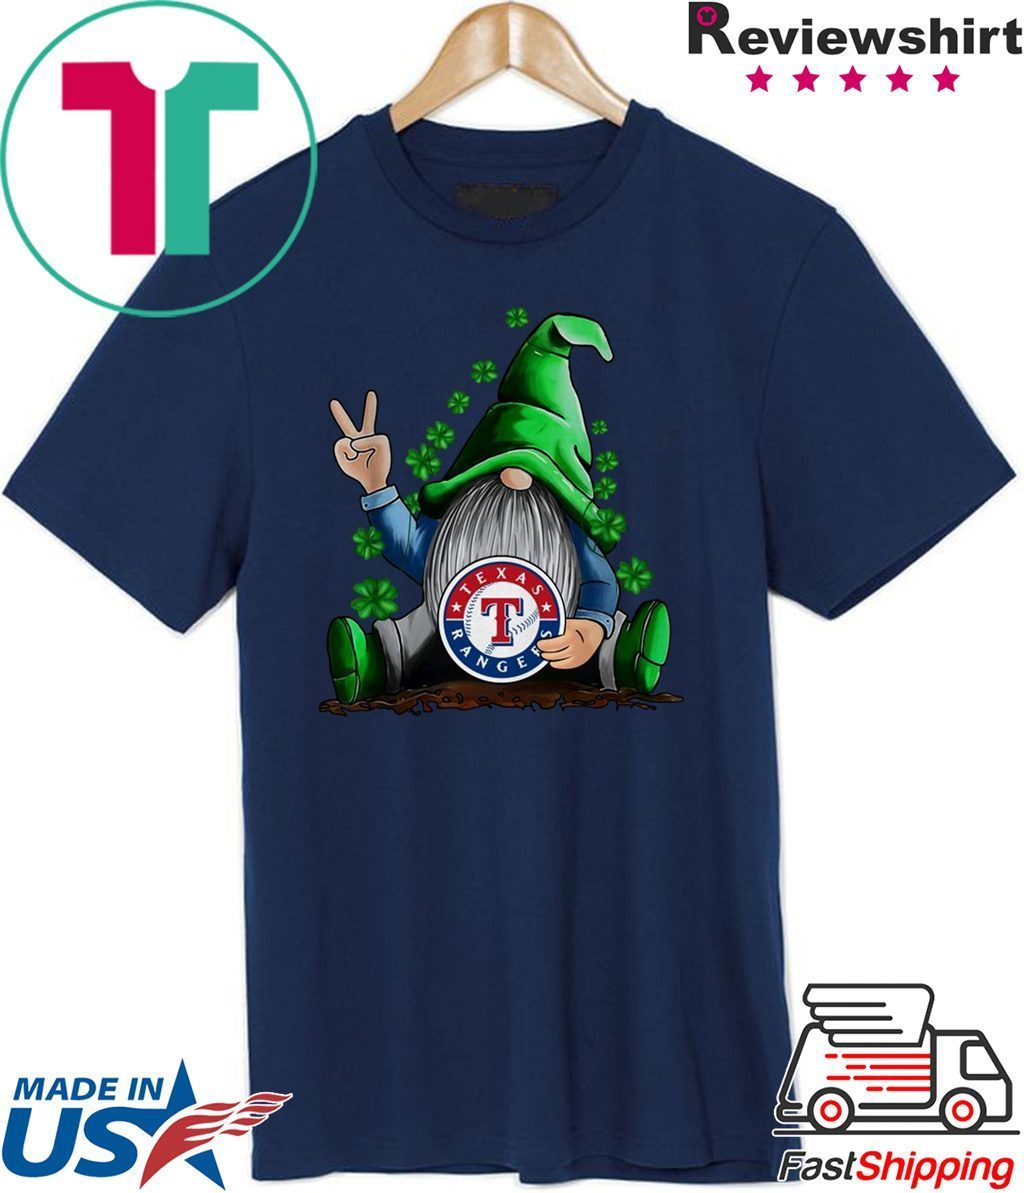 texas rangers baseball shirts